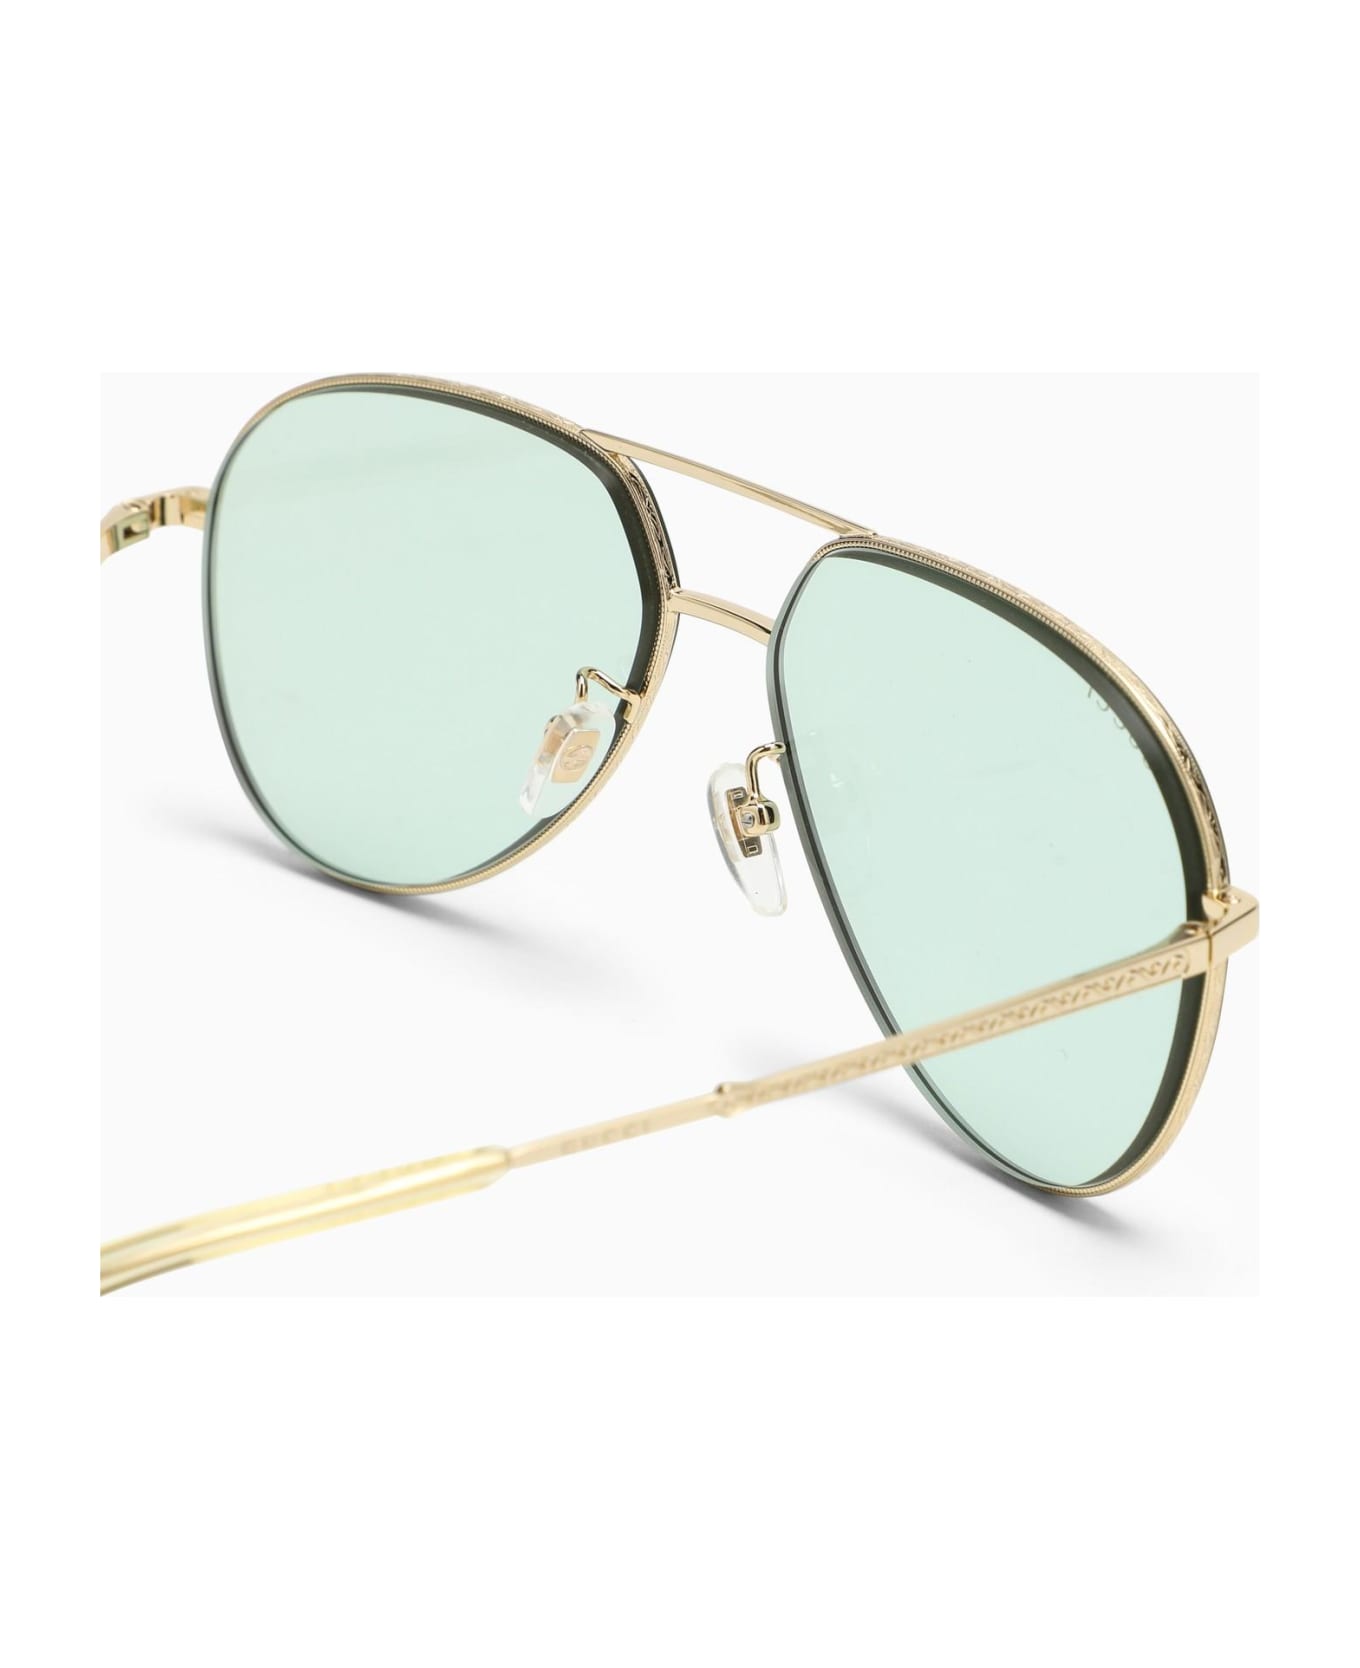 Gucci Eyewear Aviator Green Sunglasses サングラス